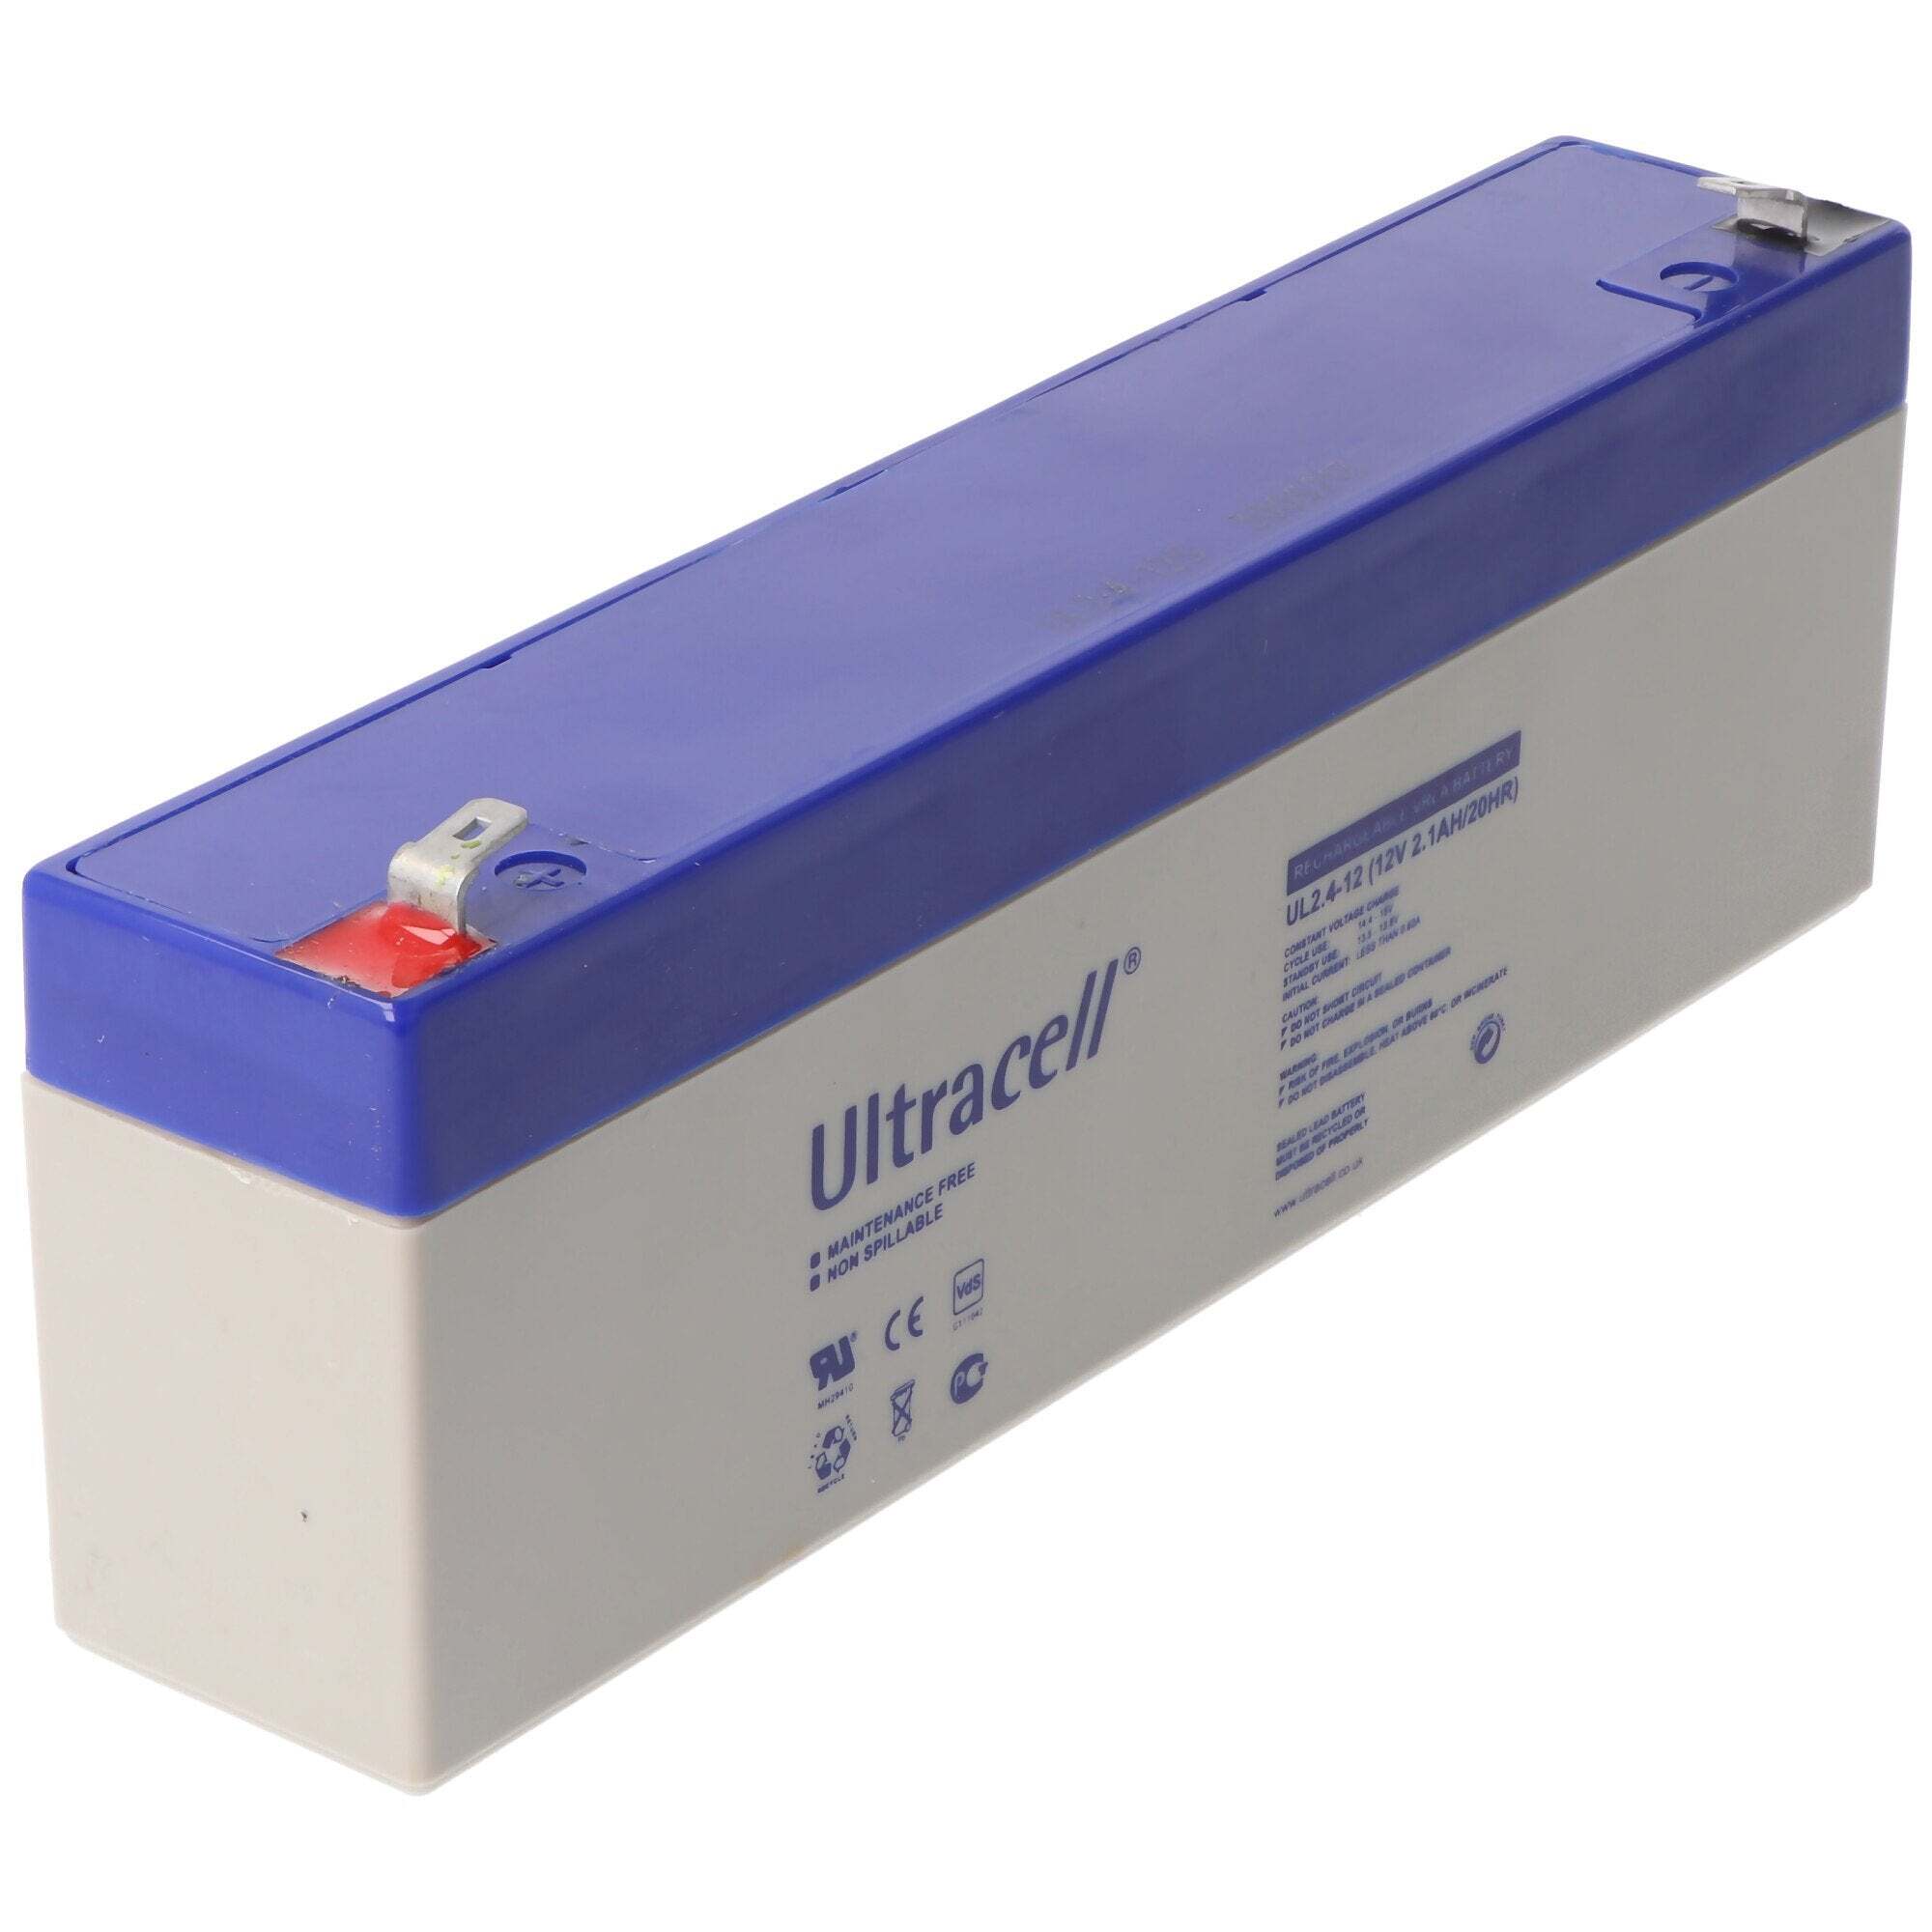 Ultracell Ultracell UL2.4-12 loodzuurbatterij 12 volt 2,4 Ah, Faston 187, 4,8 mm